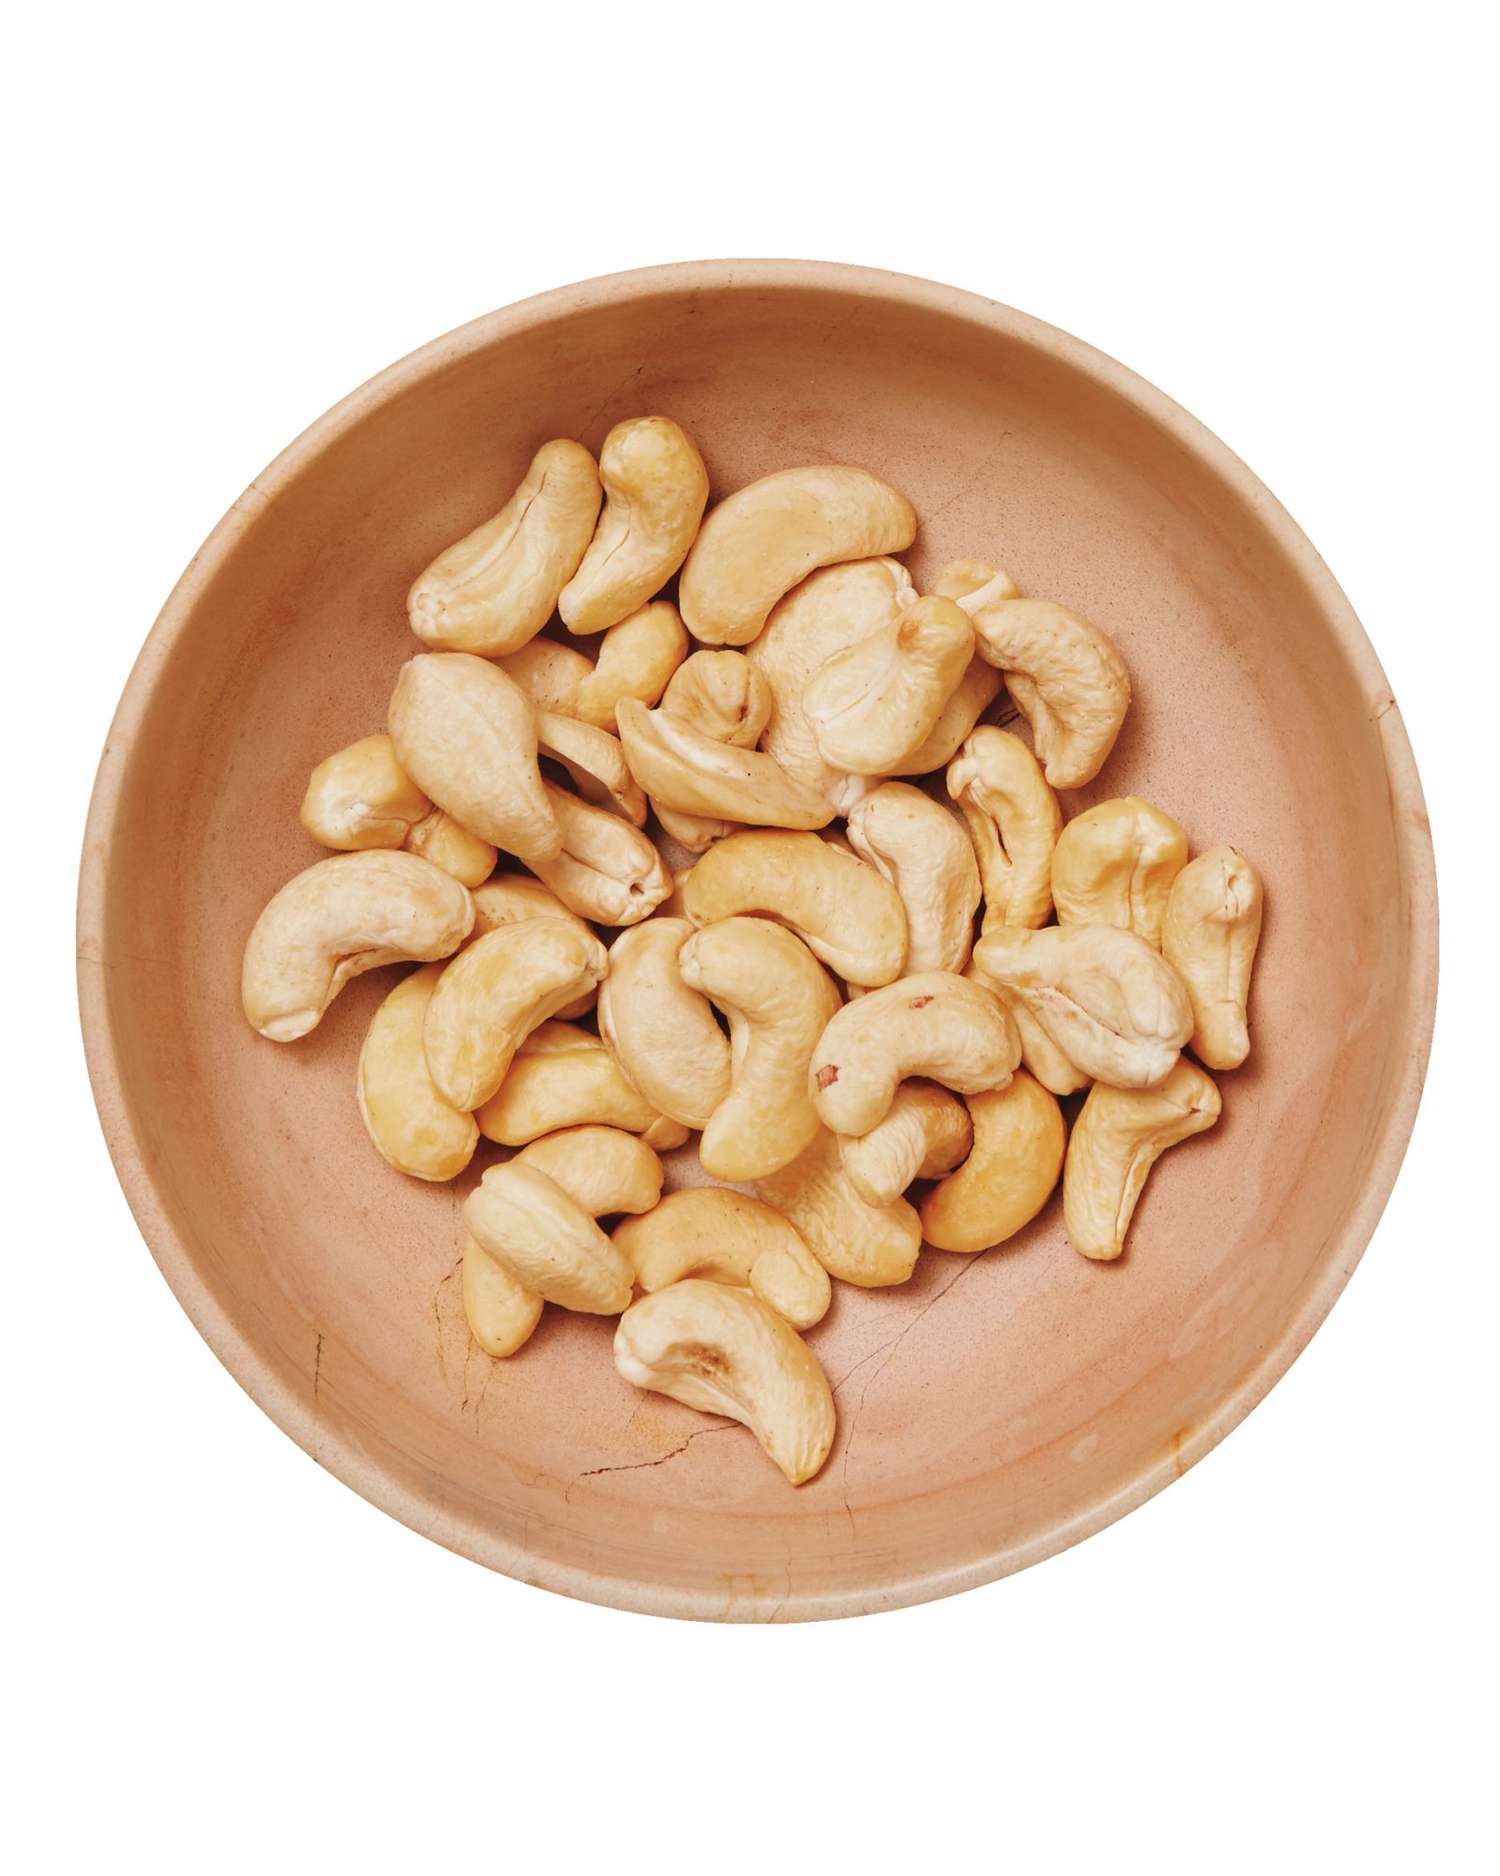 cashew-nuts-024-d112390.jpg